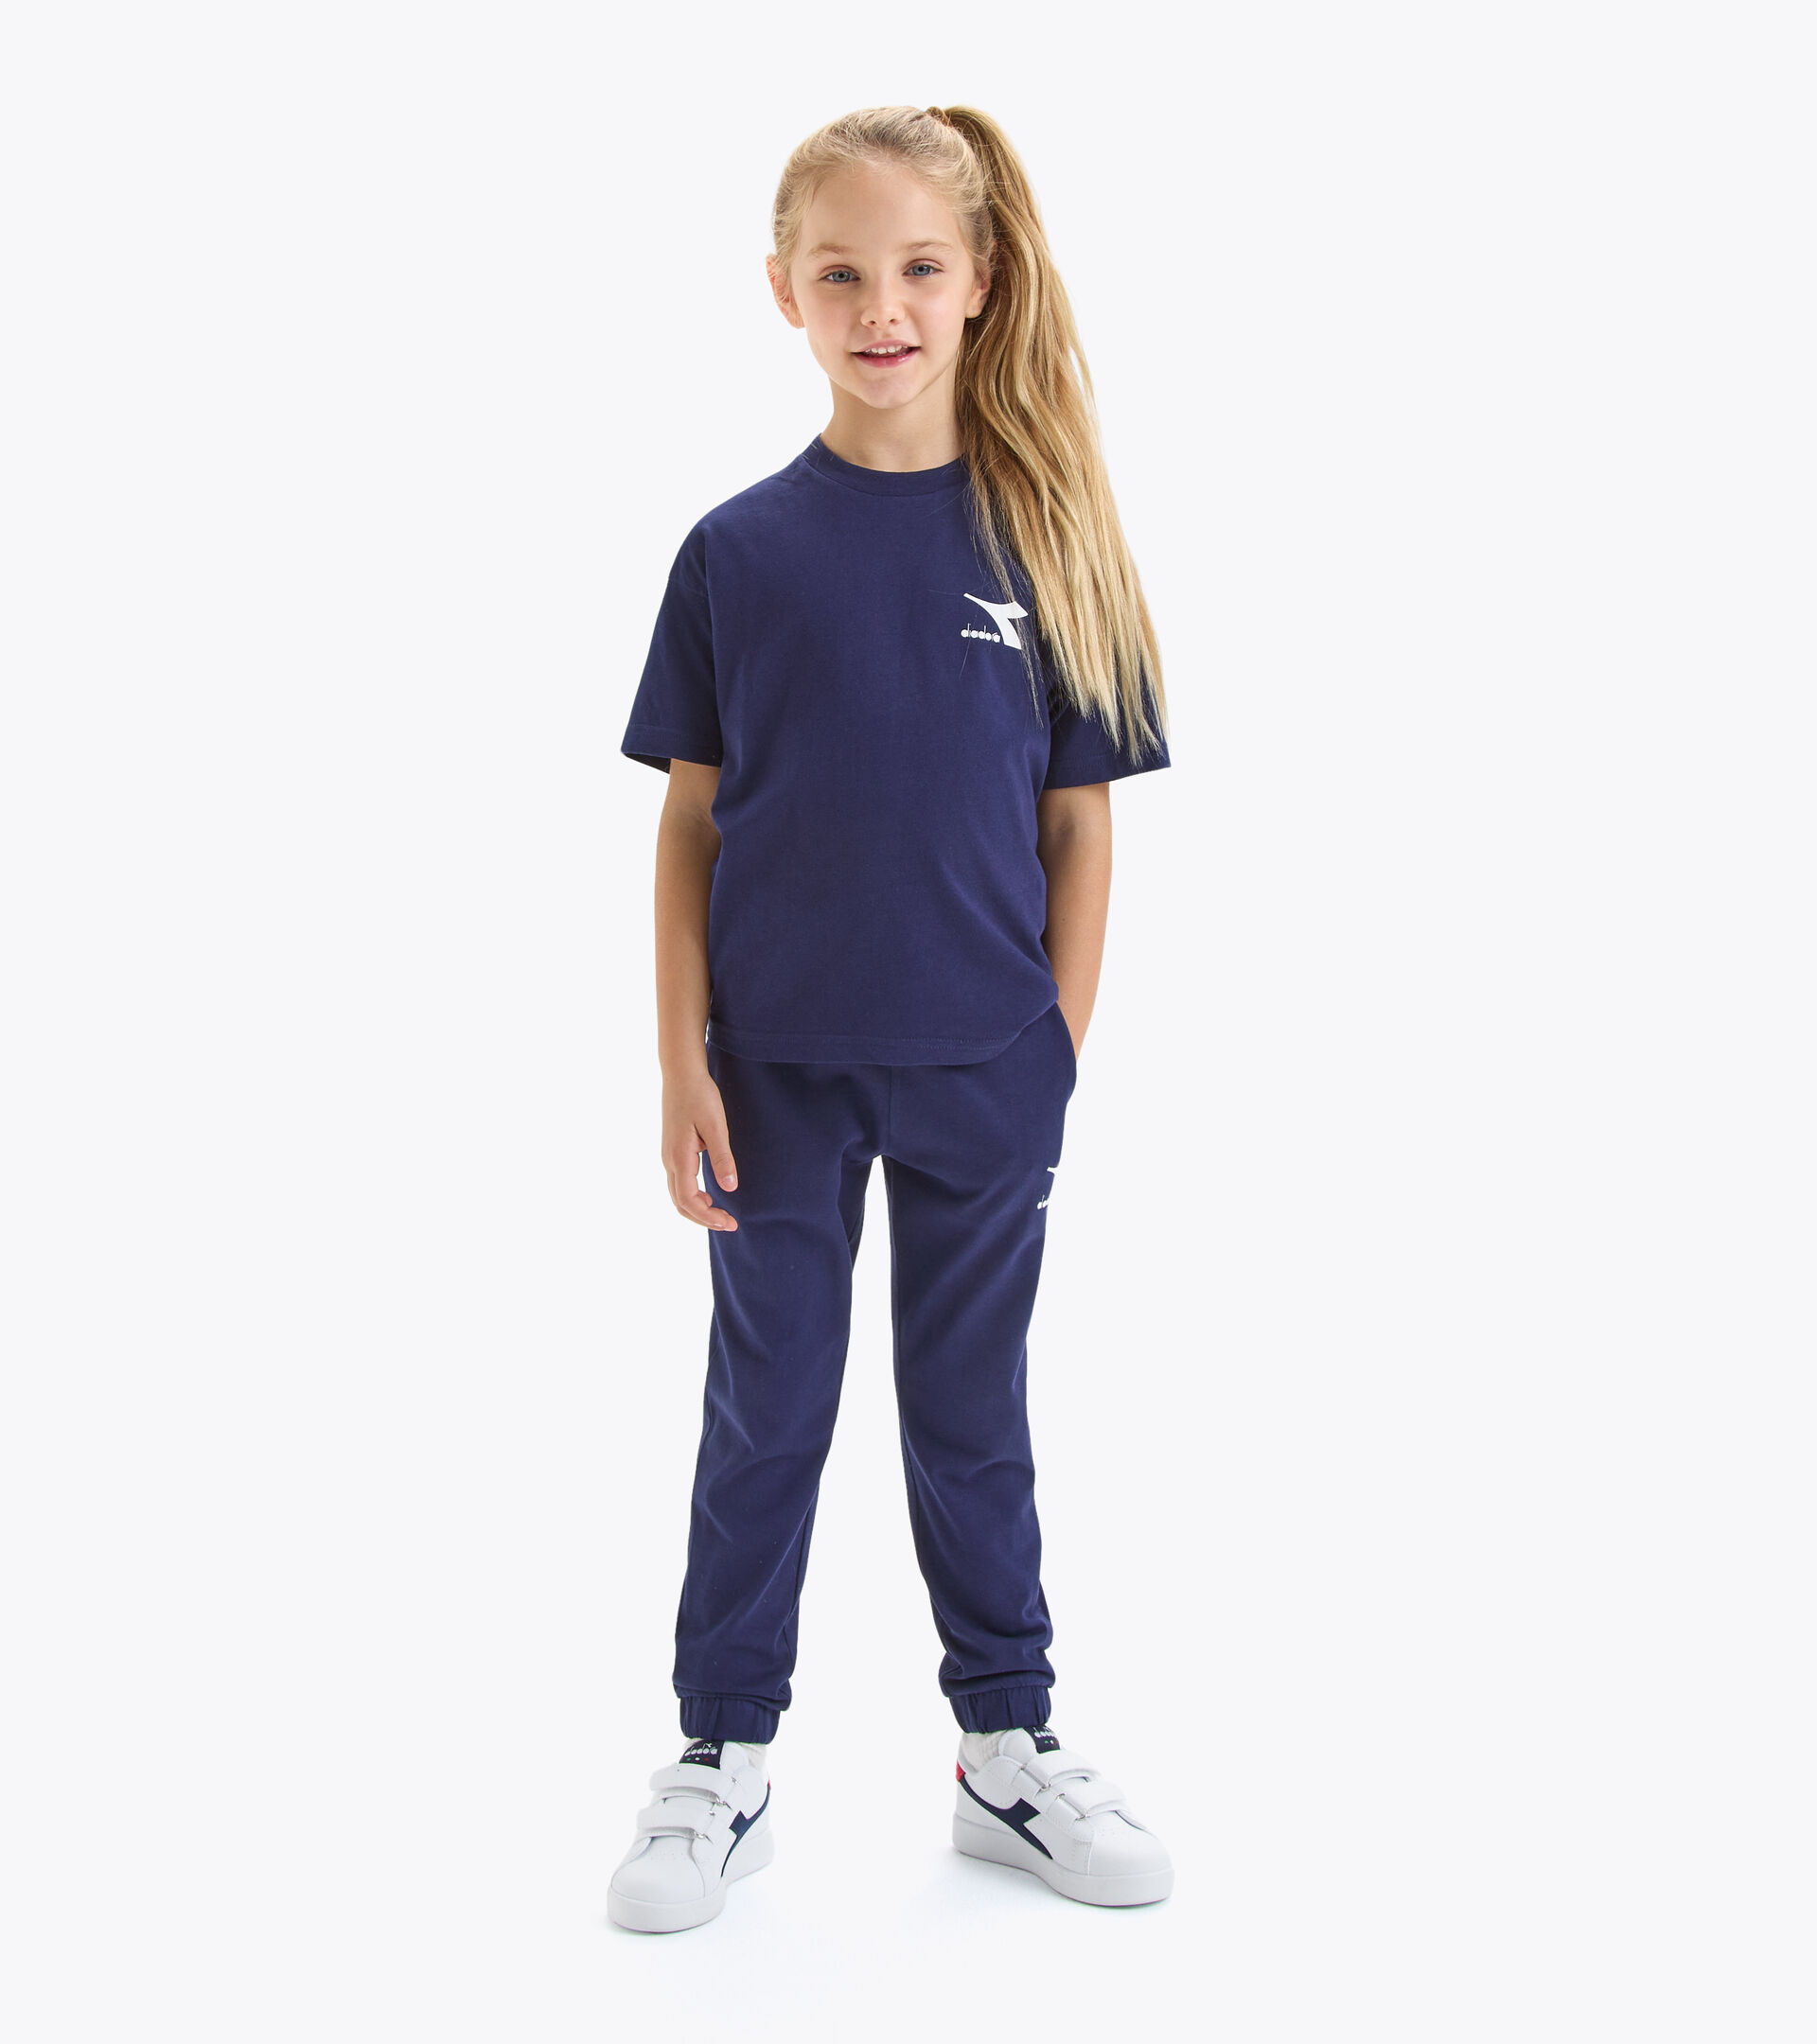 Cotton t-shirt - Kids
 JU.T-SHIRT SS SL CLASSIC NAVY - Diadora